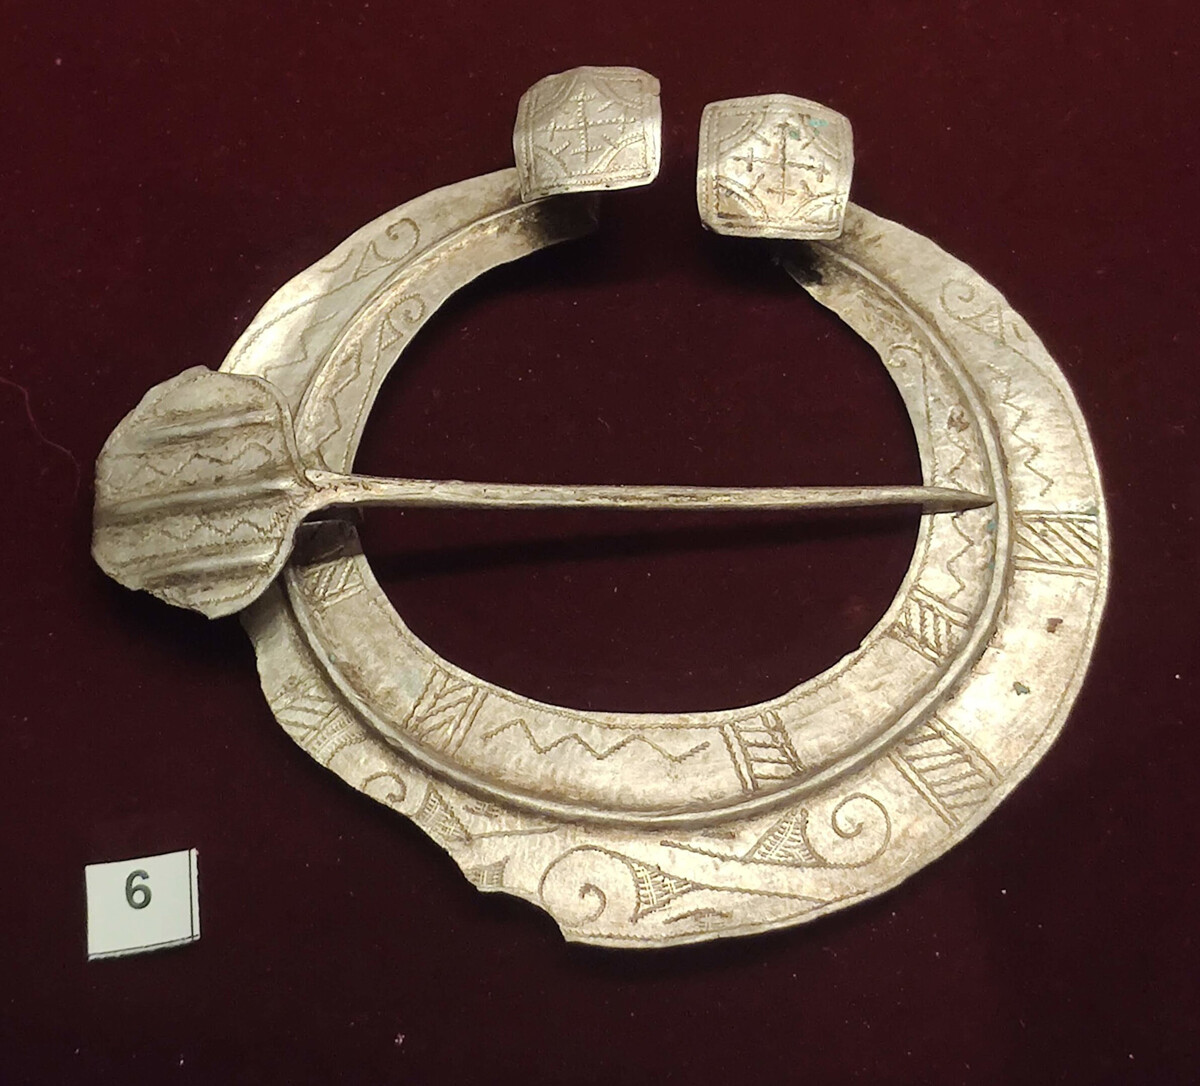 A fibula from Karelia region, 13-14th centuries, silver